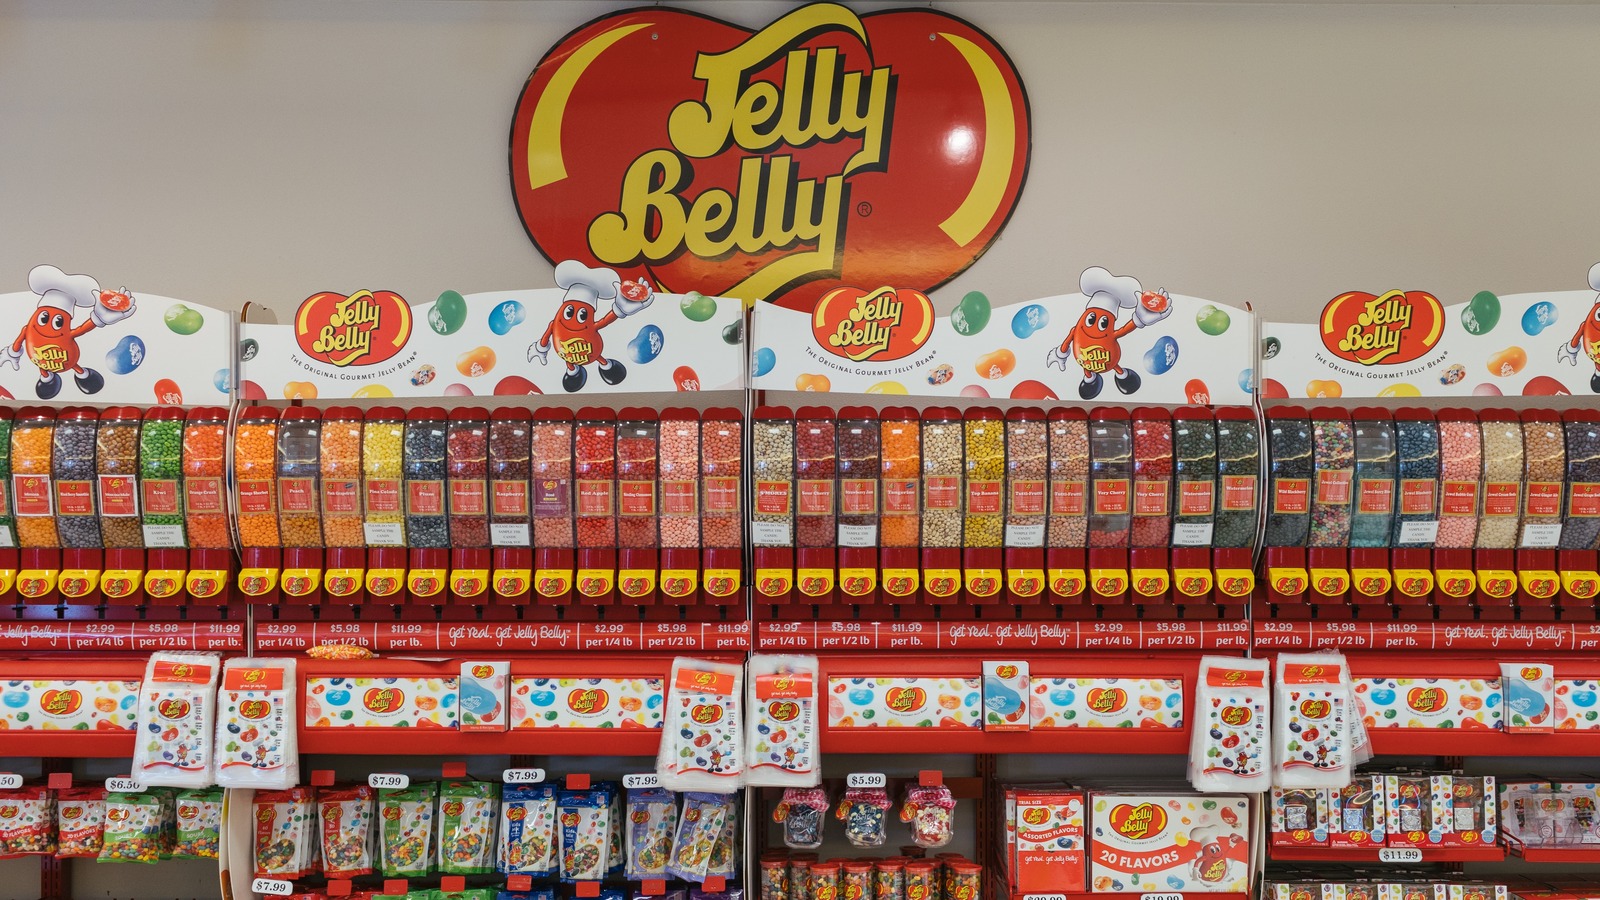 jelly belly jellybeans